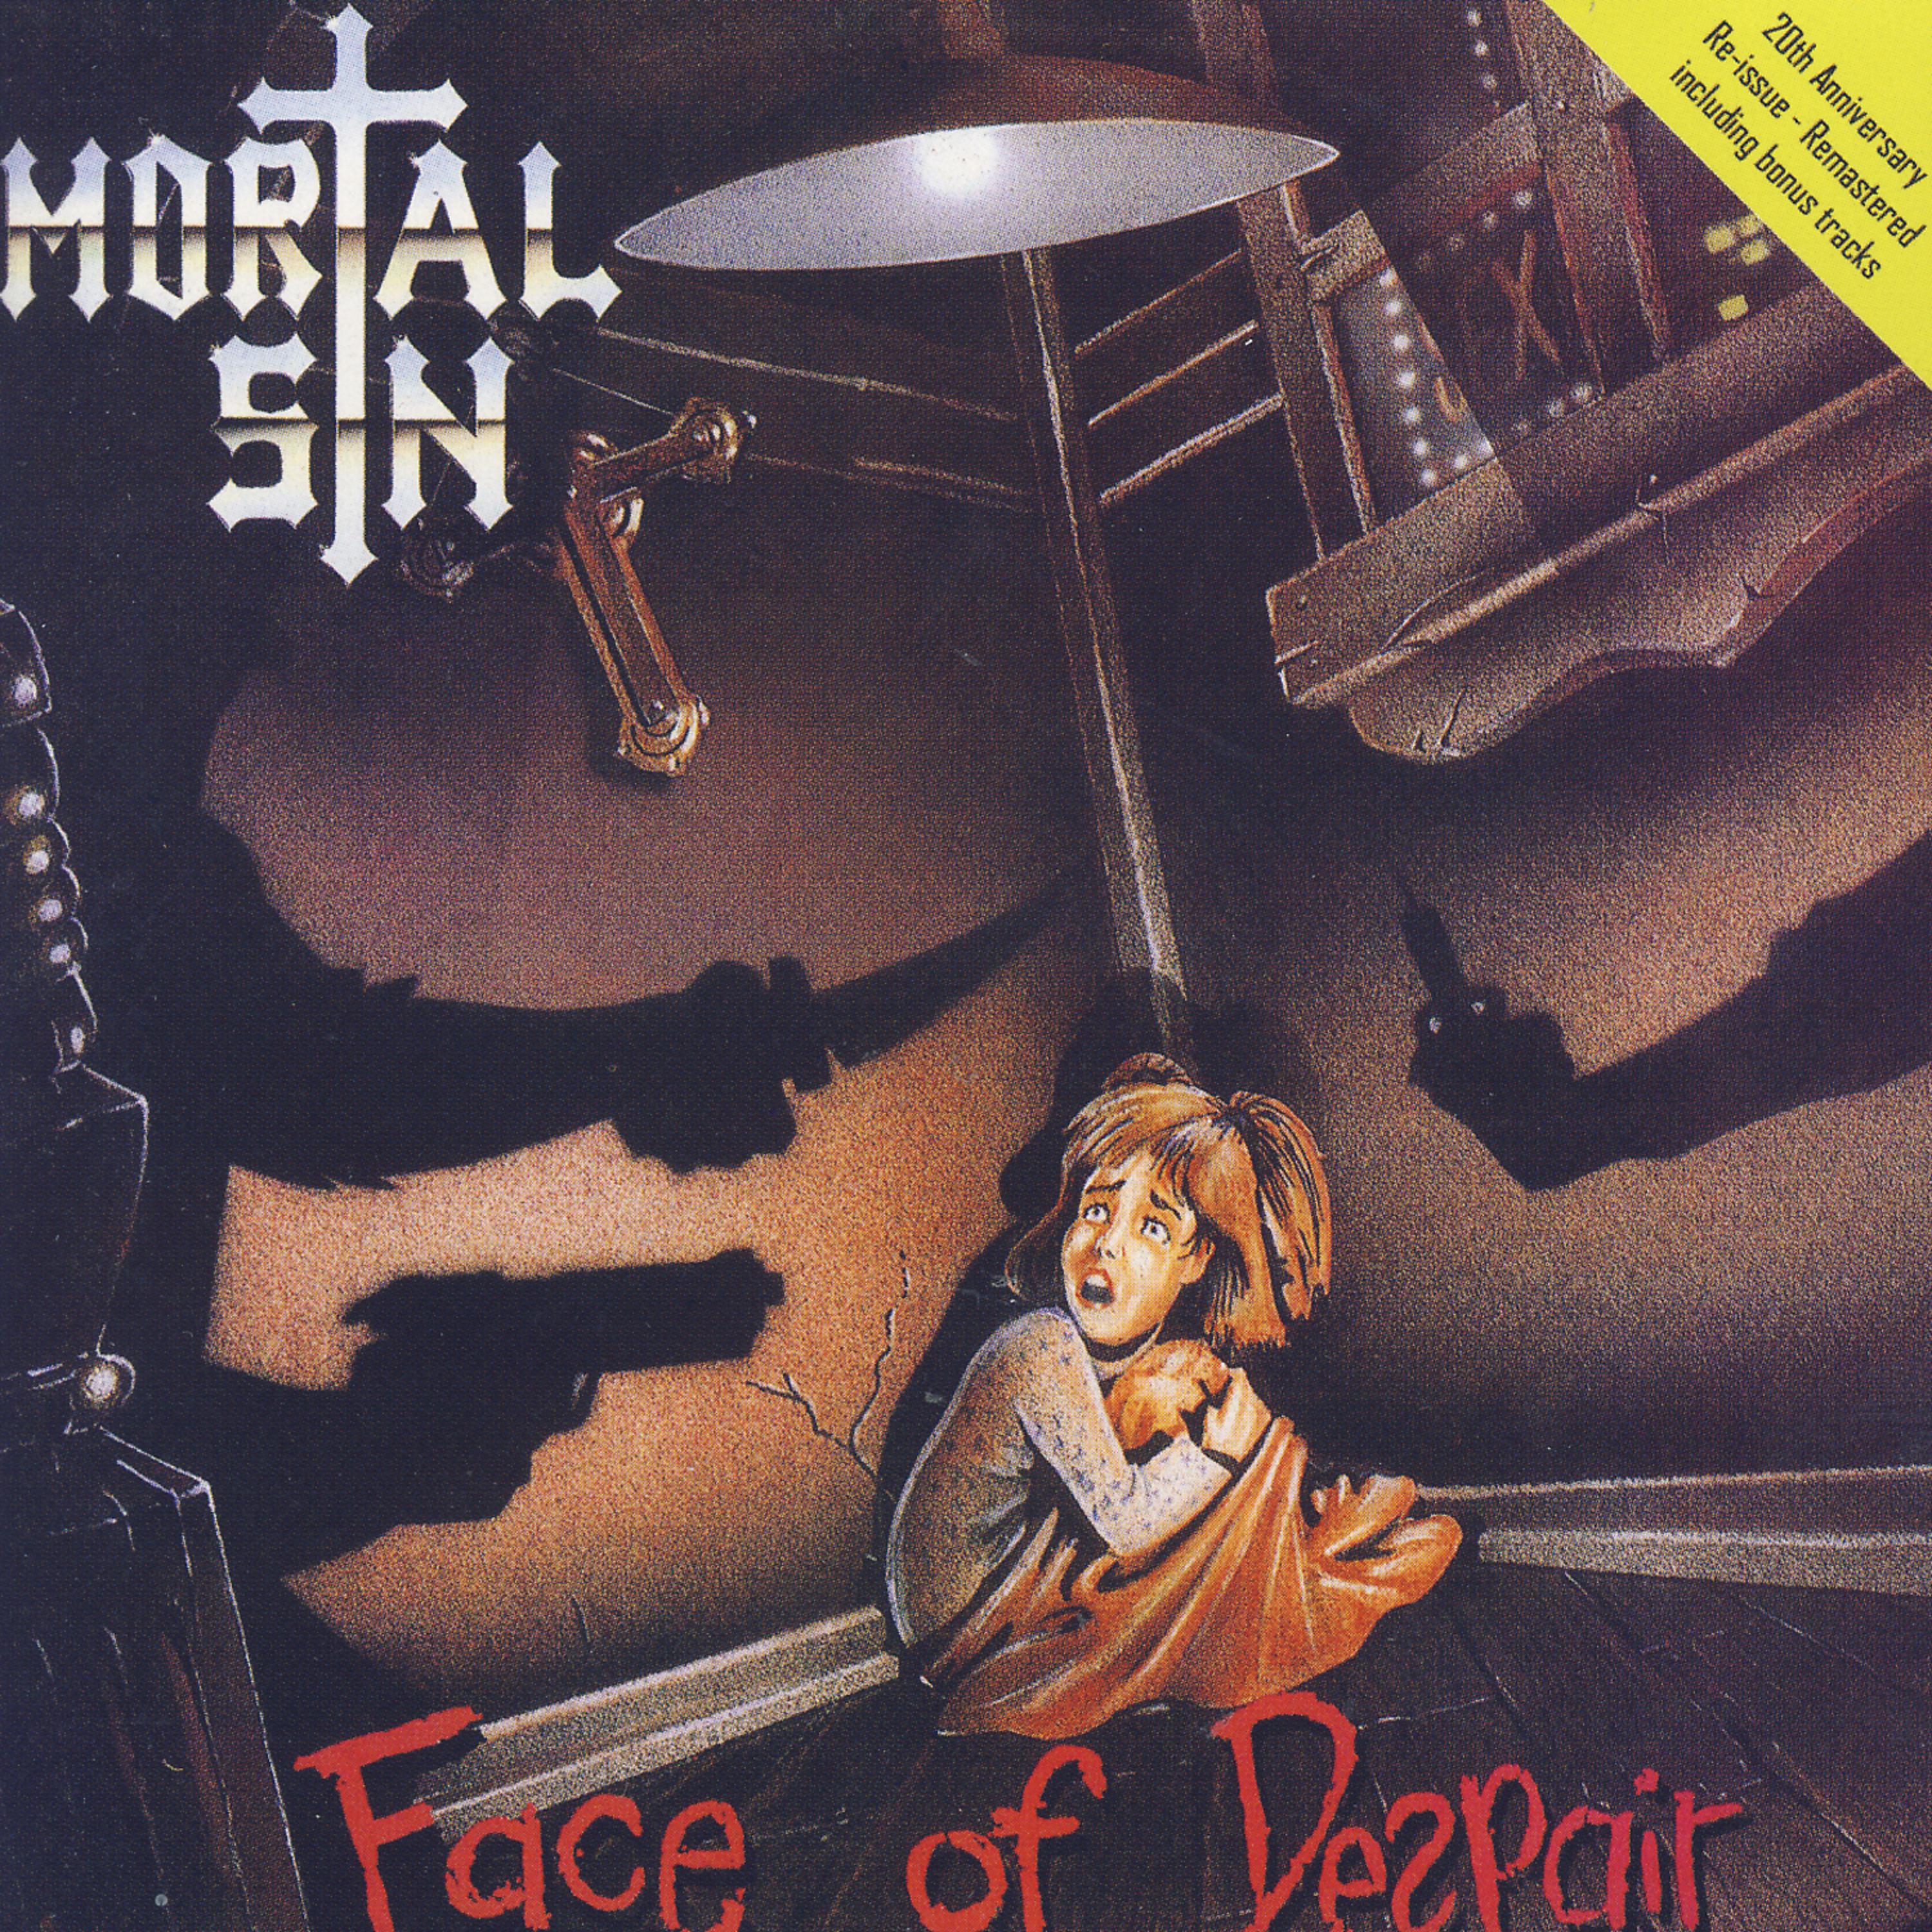 Mortal sin. Mortal sin группа. Mortal sin группа дискография. Mortal sin Mayhemic Destruction 1987.